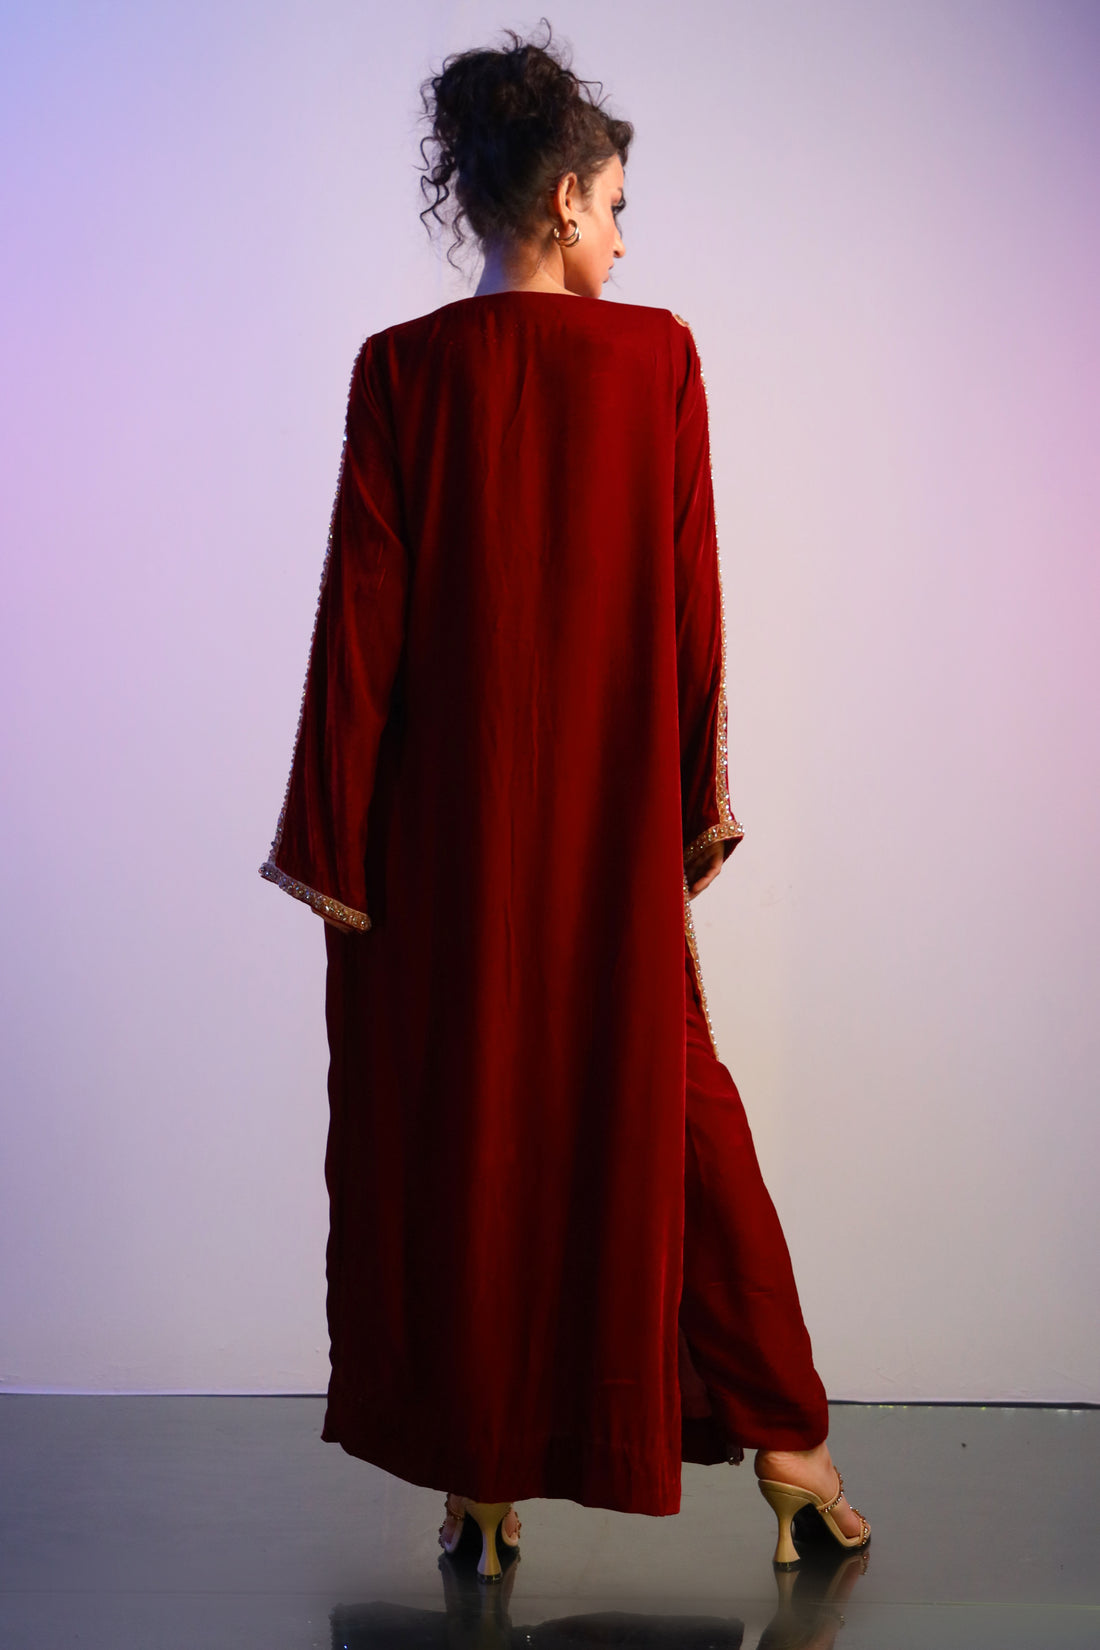 Maleficent Long 2pc Dress Maroon